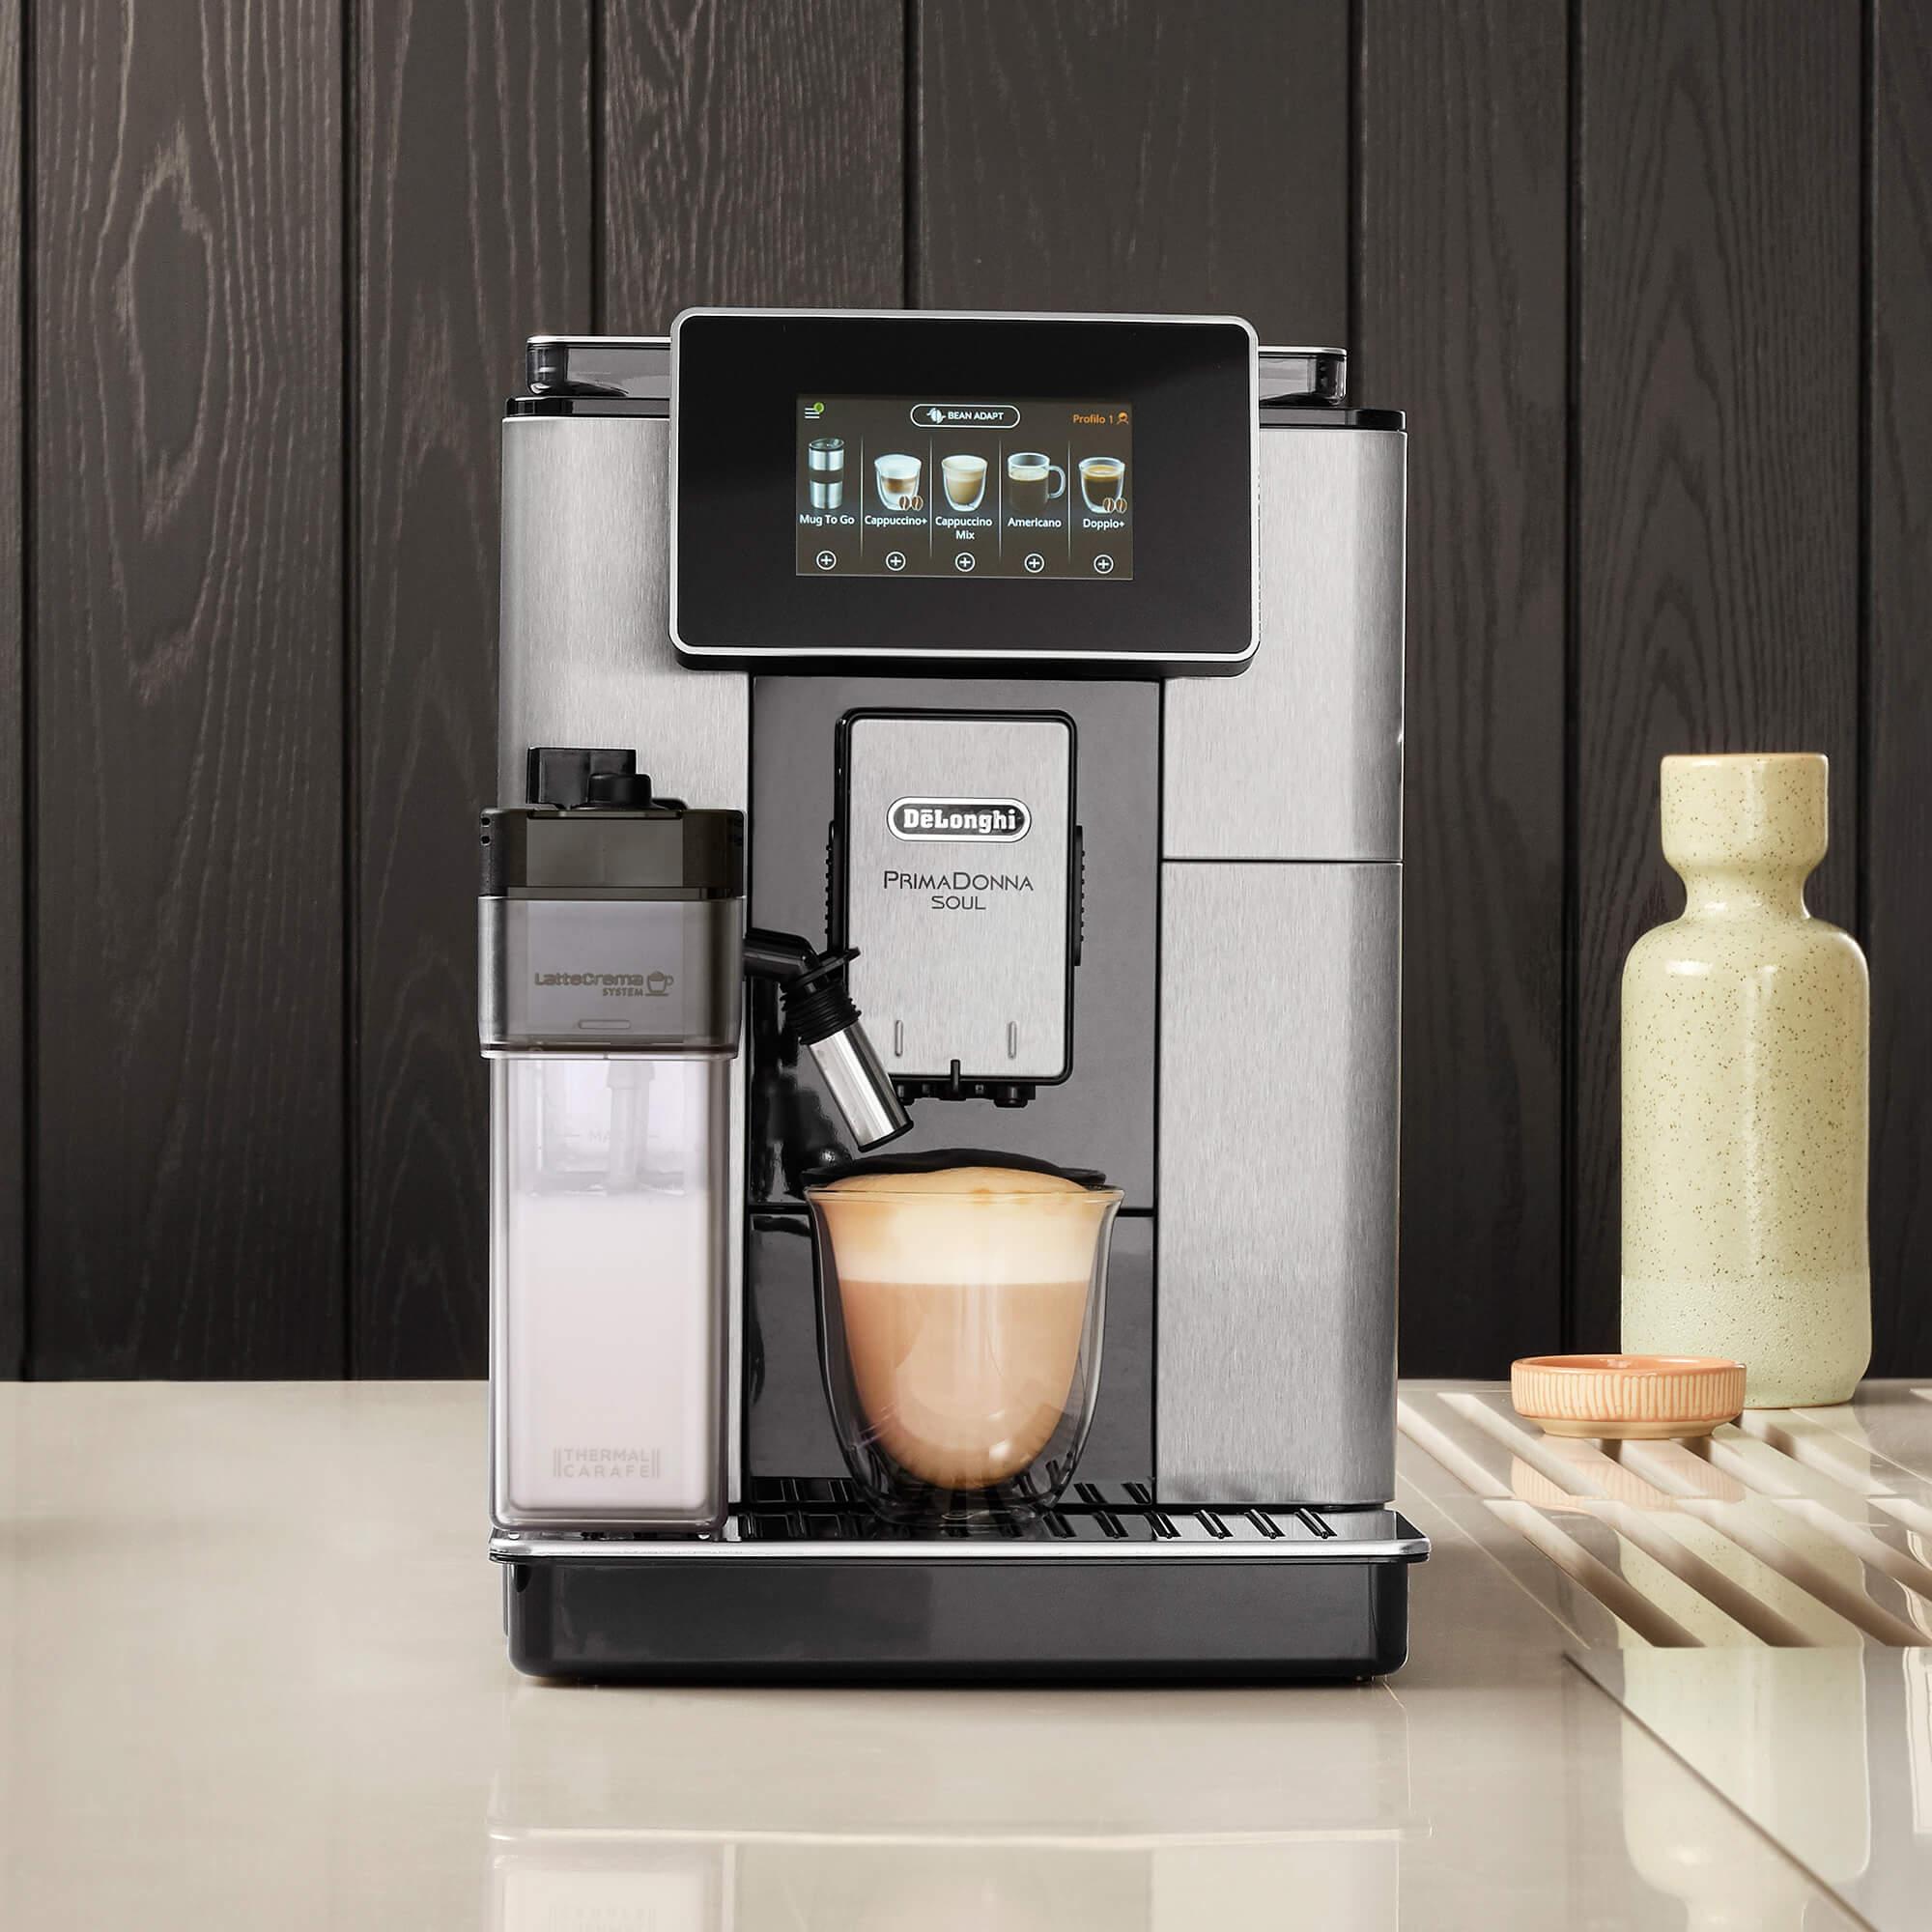 DeLonghi PrimaDonna Soul ECAM61075MB Fully Automatic Coffee Machine Black Image 5